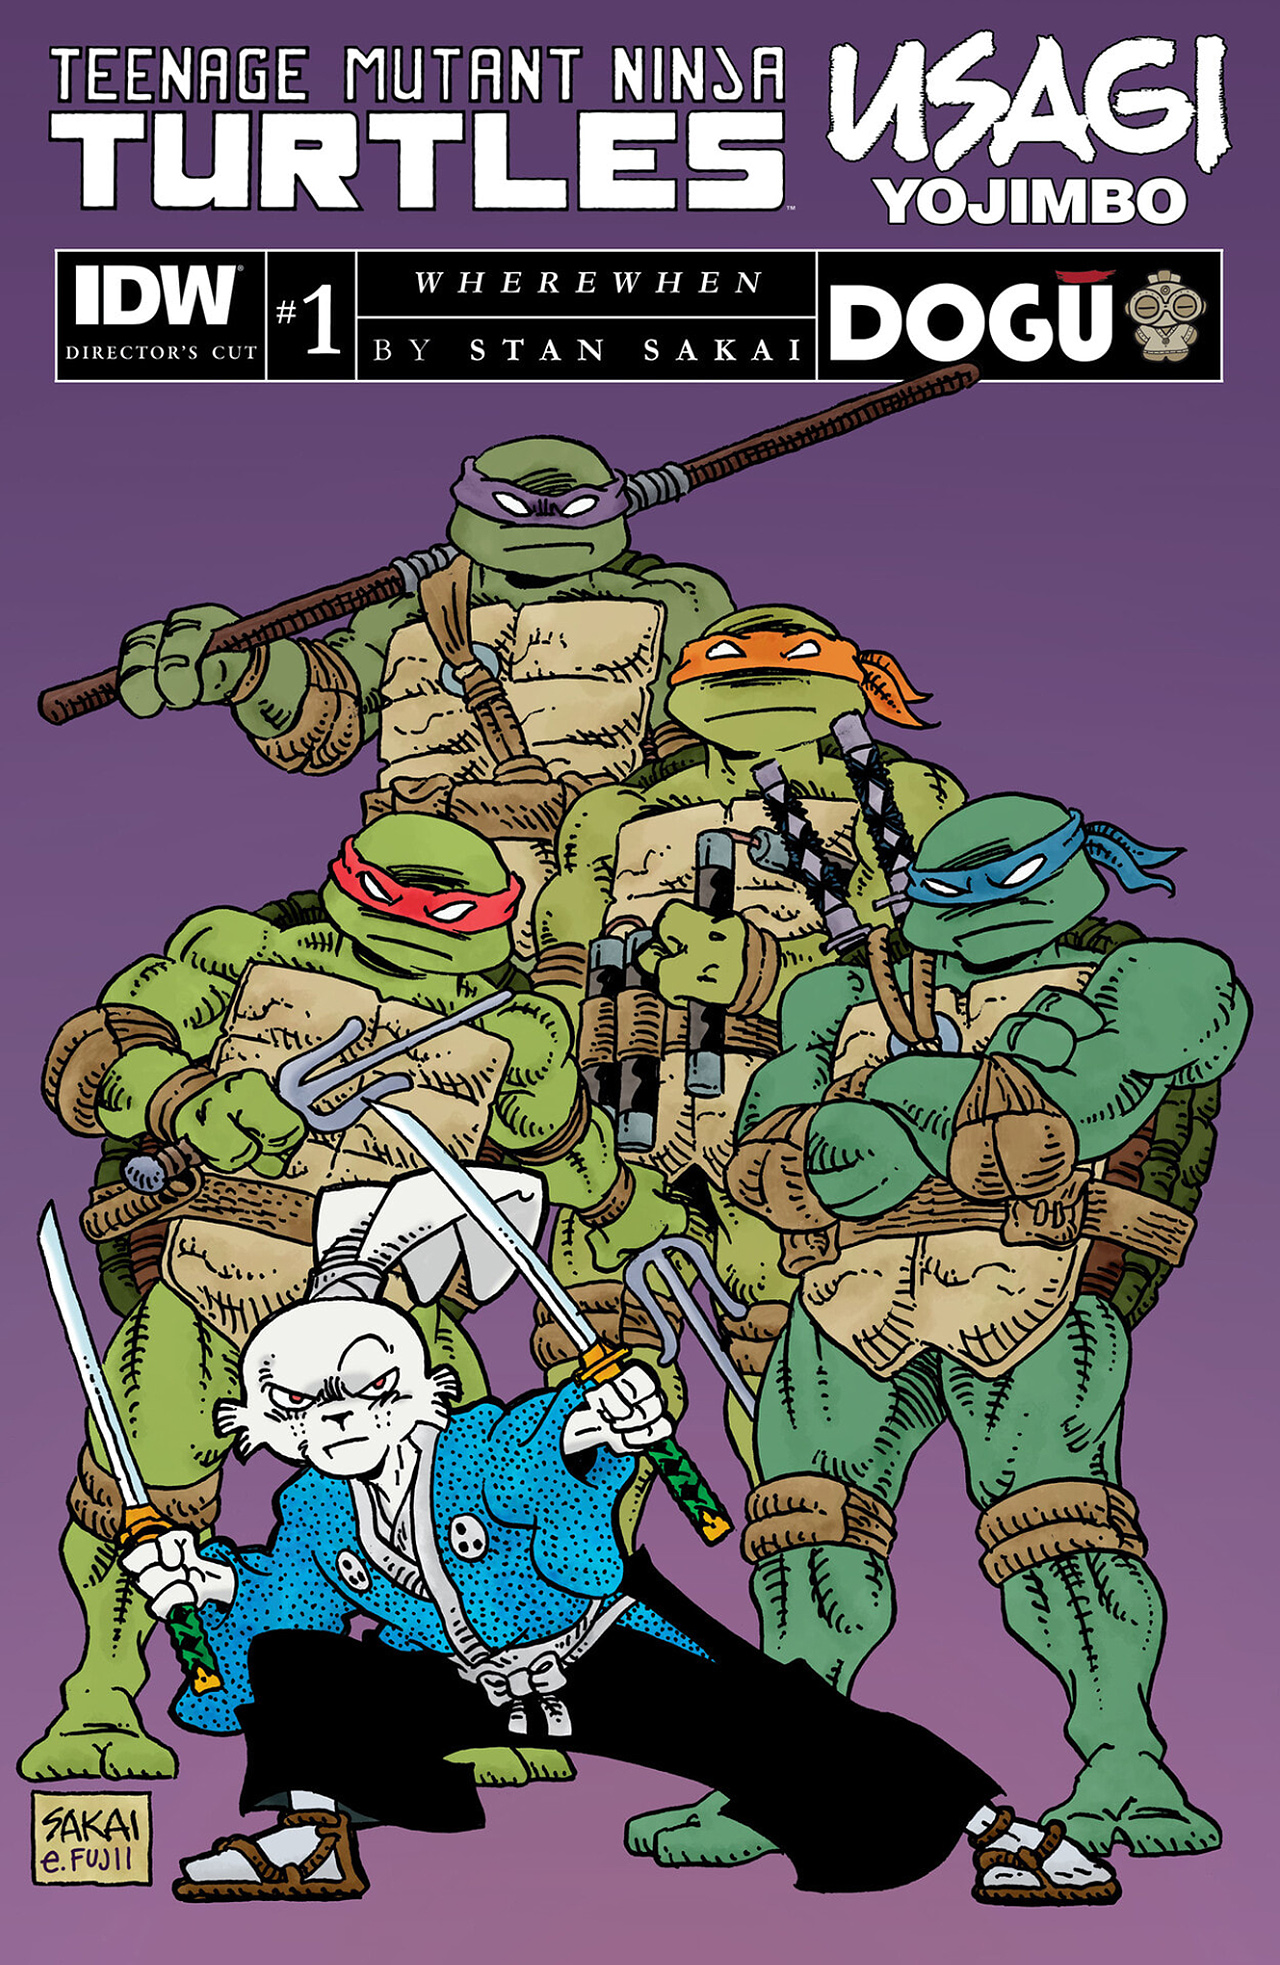 Read online Teenage Mutant Ninja Turtles/Usagi Yojimbo: WhereWhen #1: Director’s Cut comic -  Issue #1: Director’s Cut Full - 1